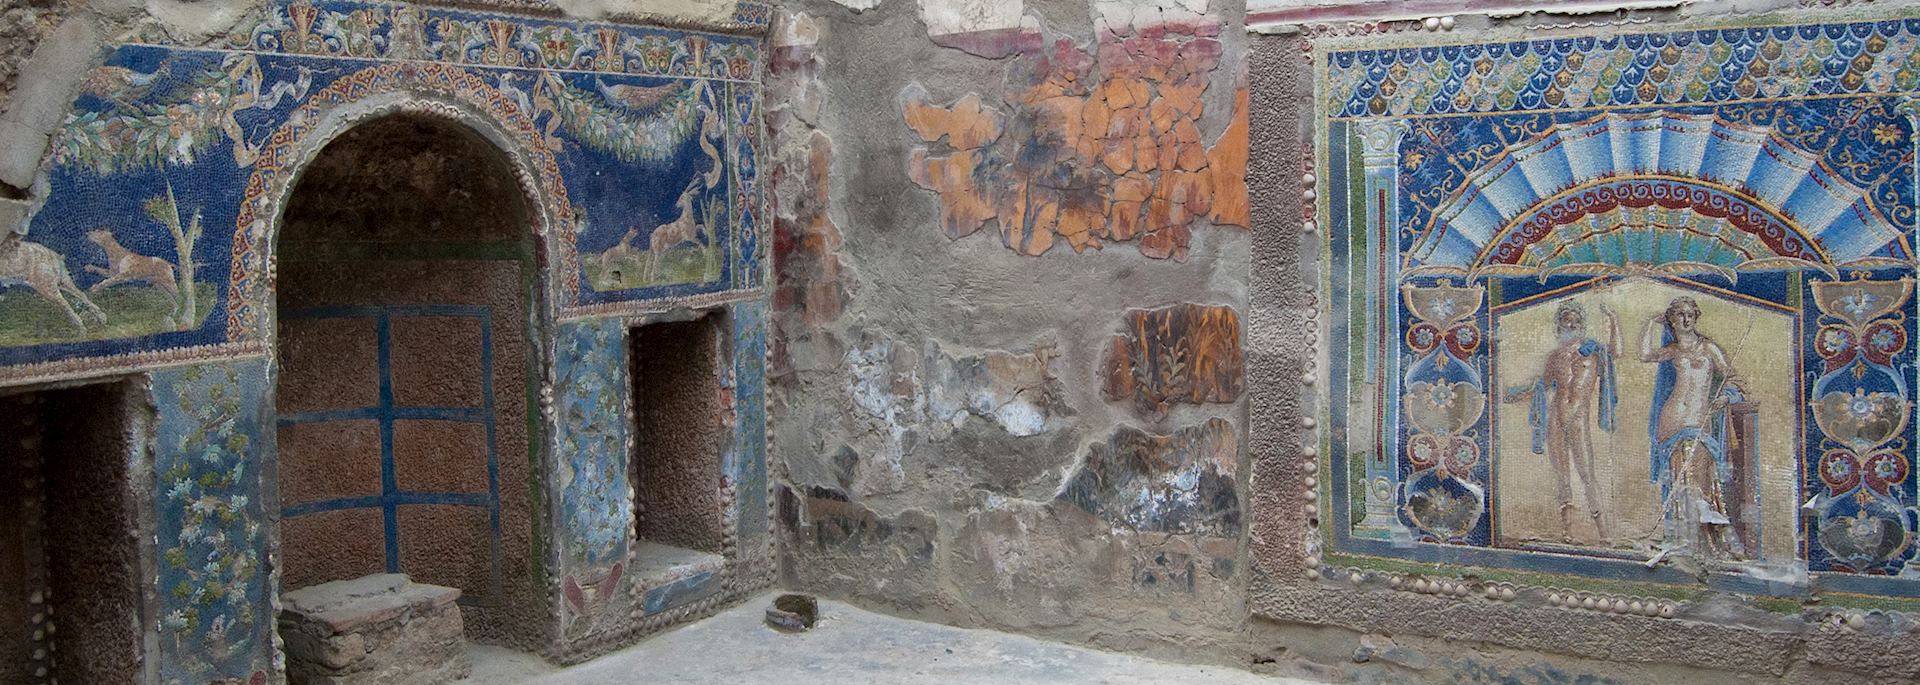 Mosaics on the walls of a villa, Herculaneum 